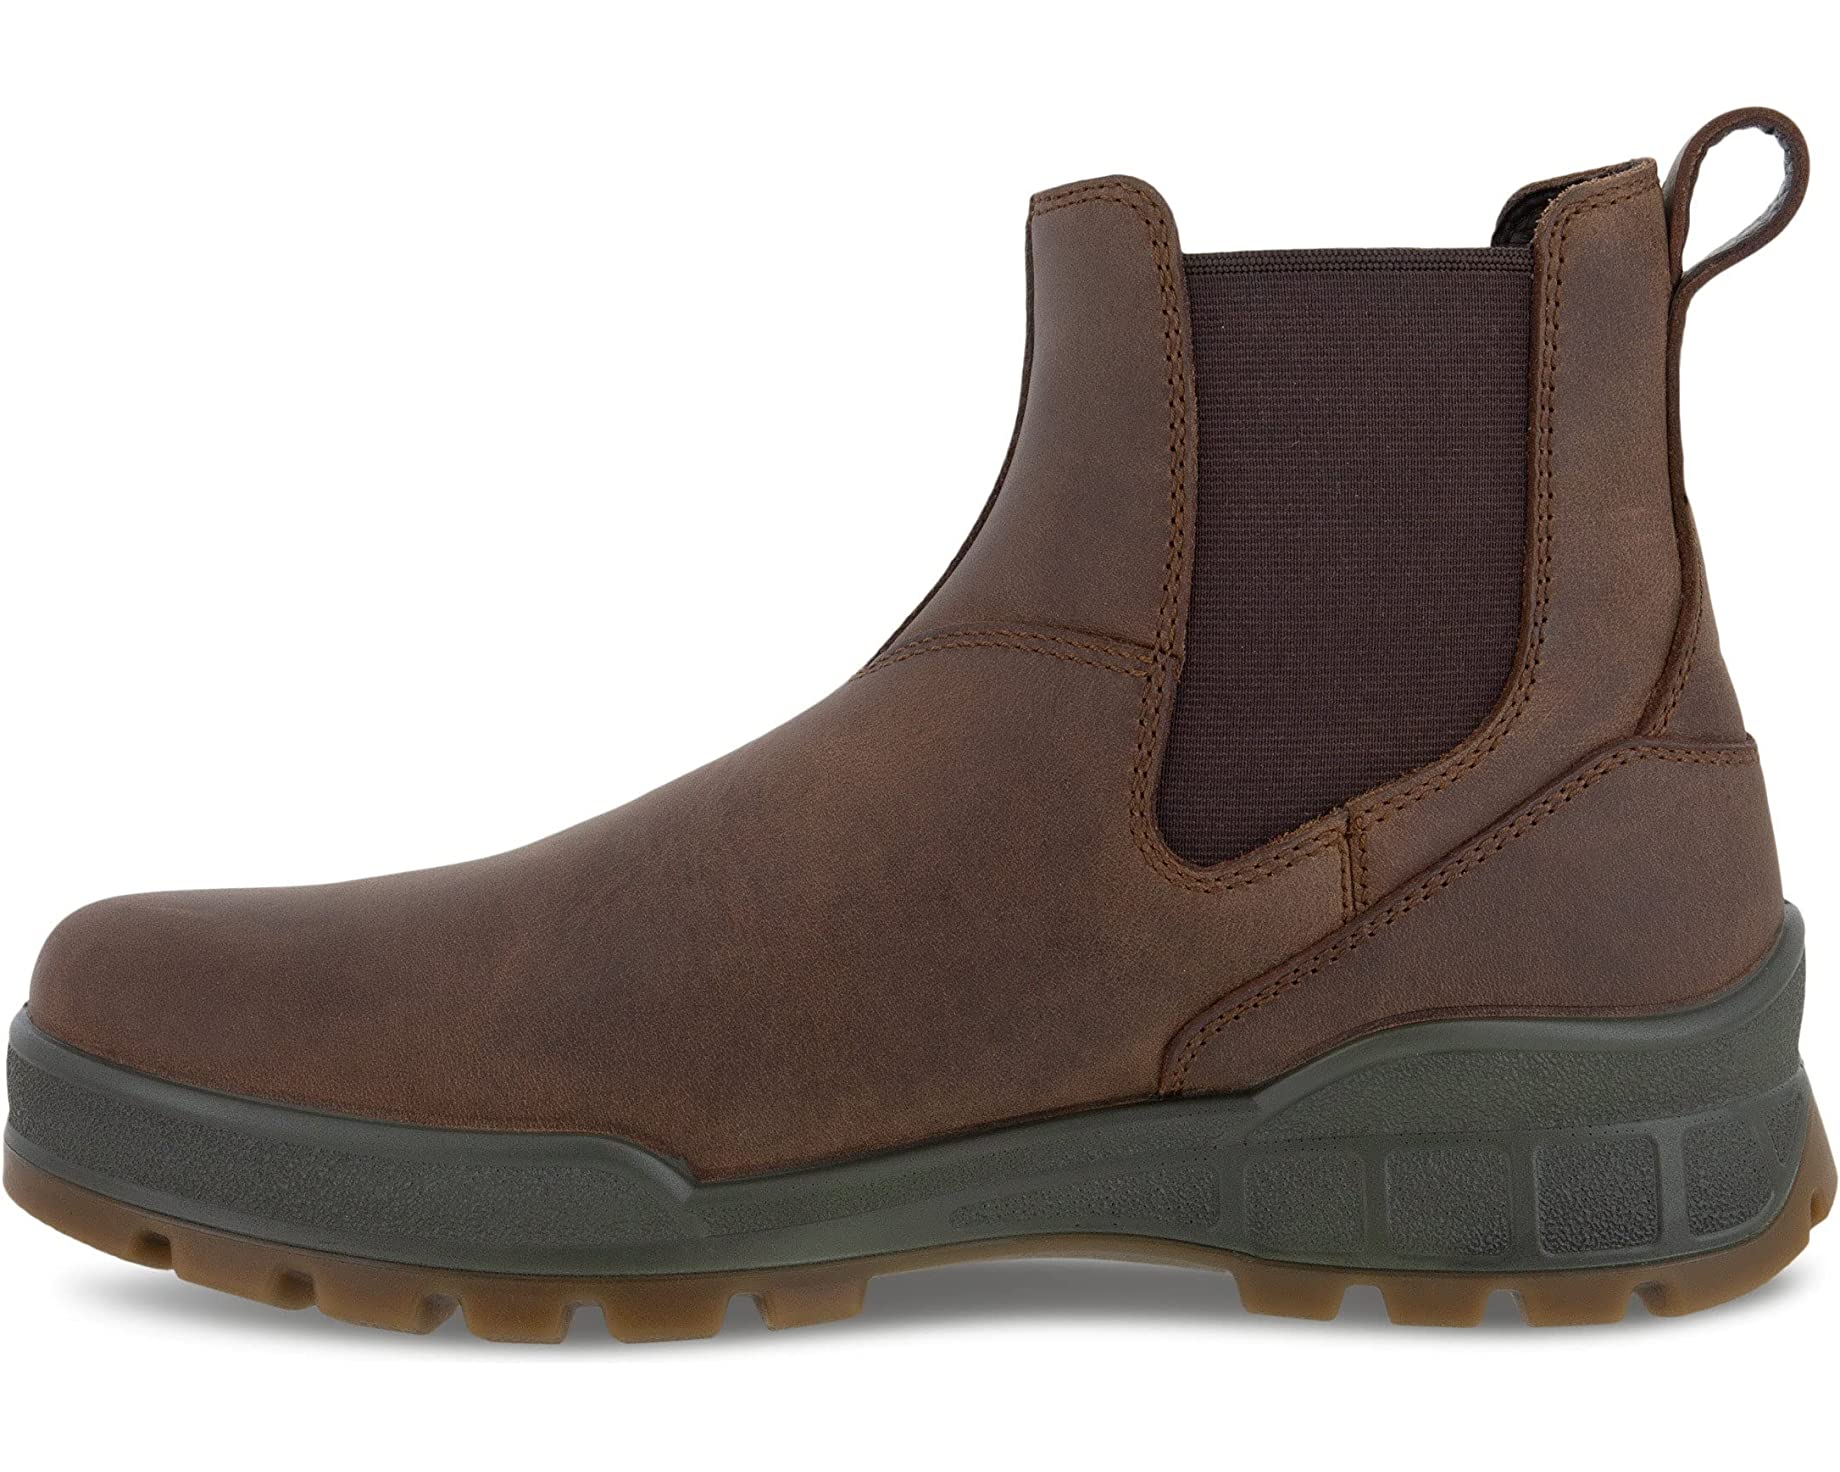 Ботинки Track 25 Hydromax Water Resistant Chelsea Boot ECCO, коричневый ботинки челси ecco размер 38 серый